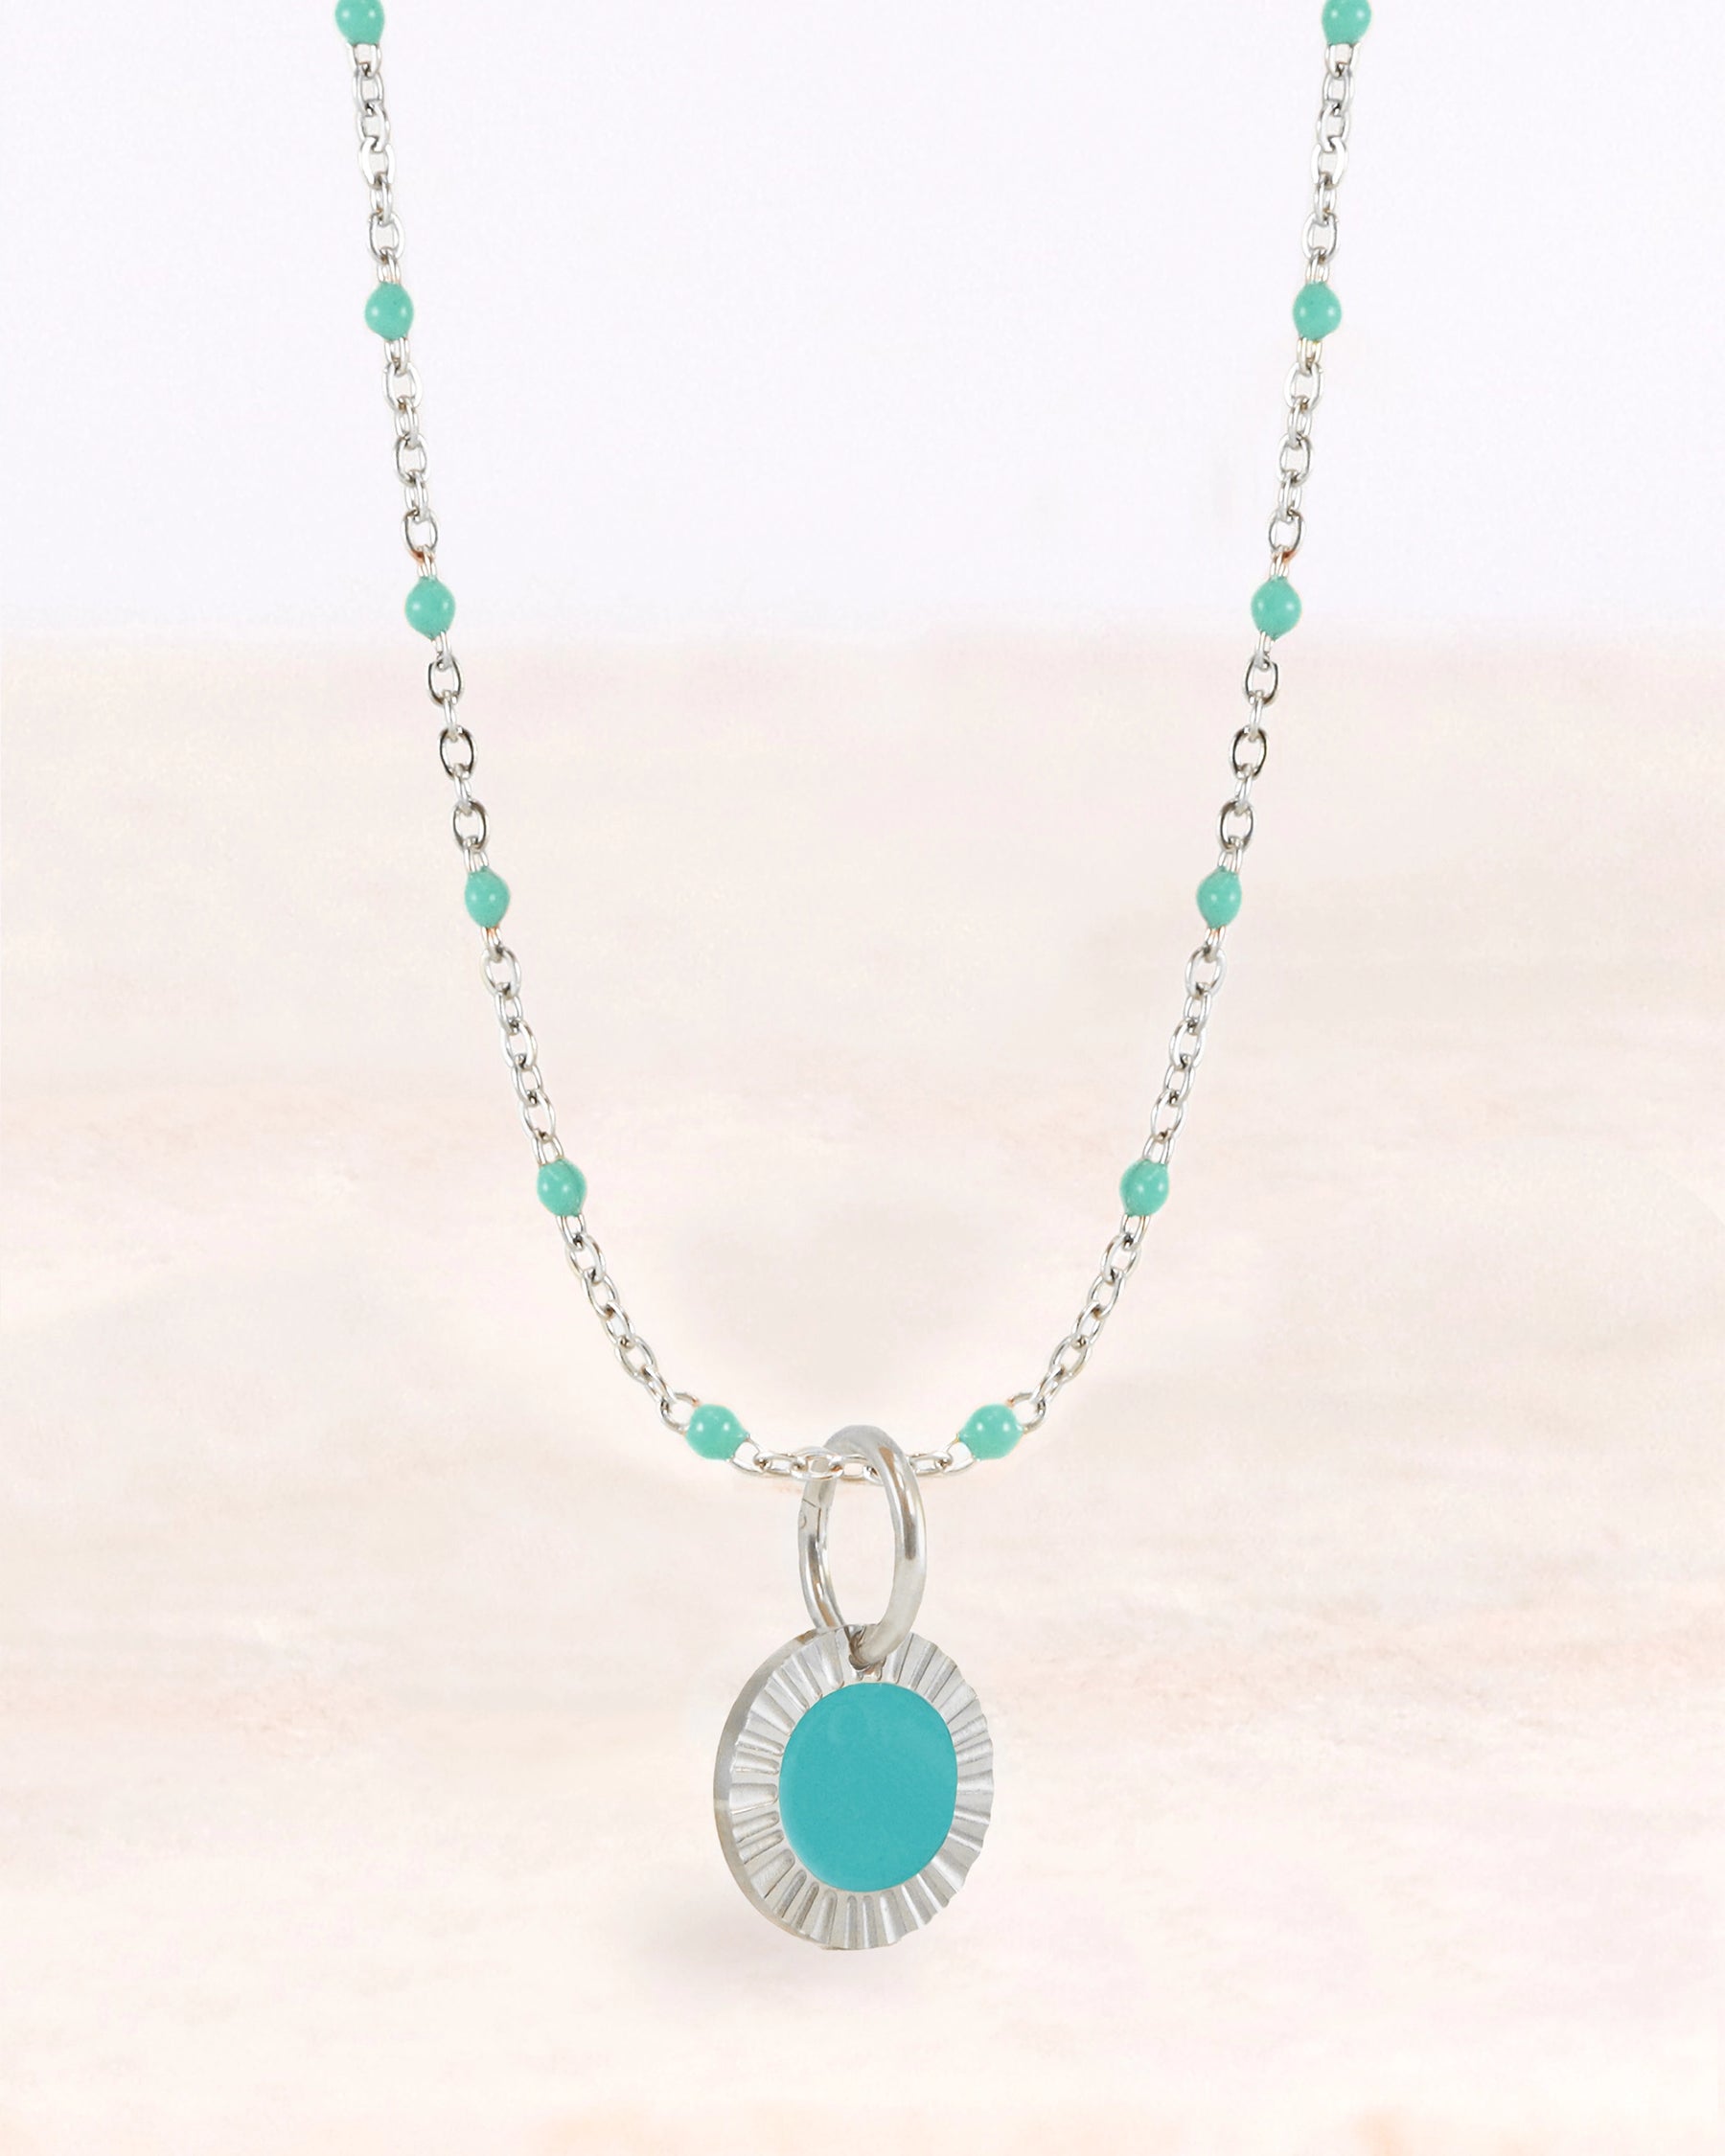 CUS® Jewellery set Neva necklace and Kyra charm turquoise - Freedom & Healing